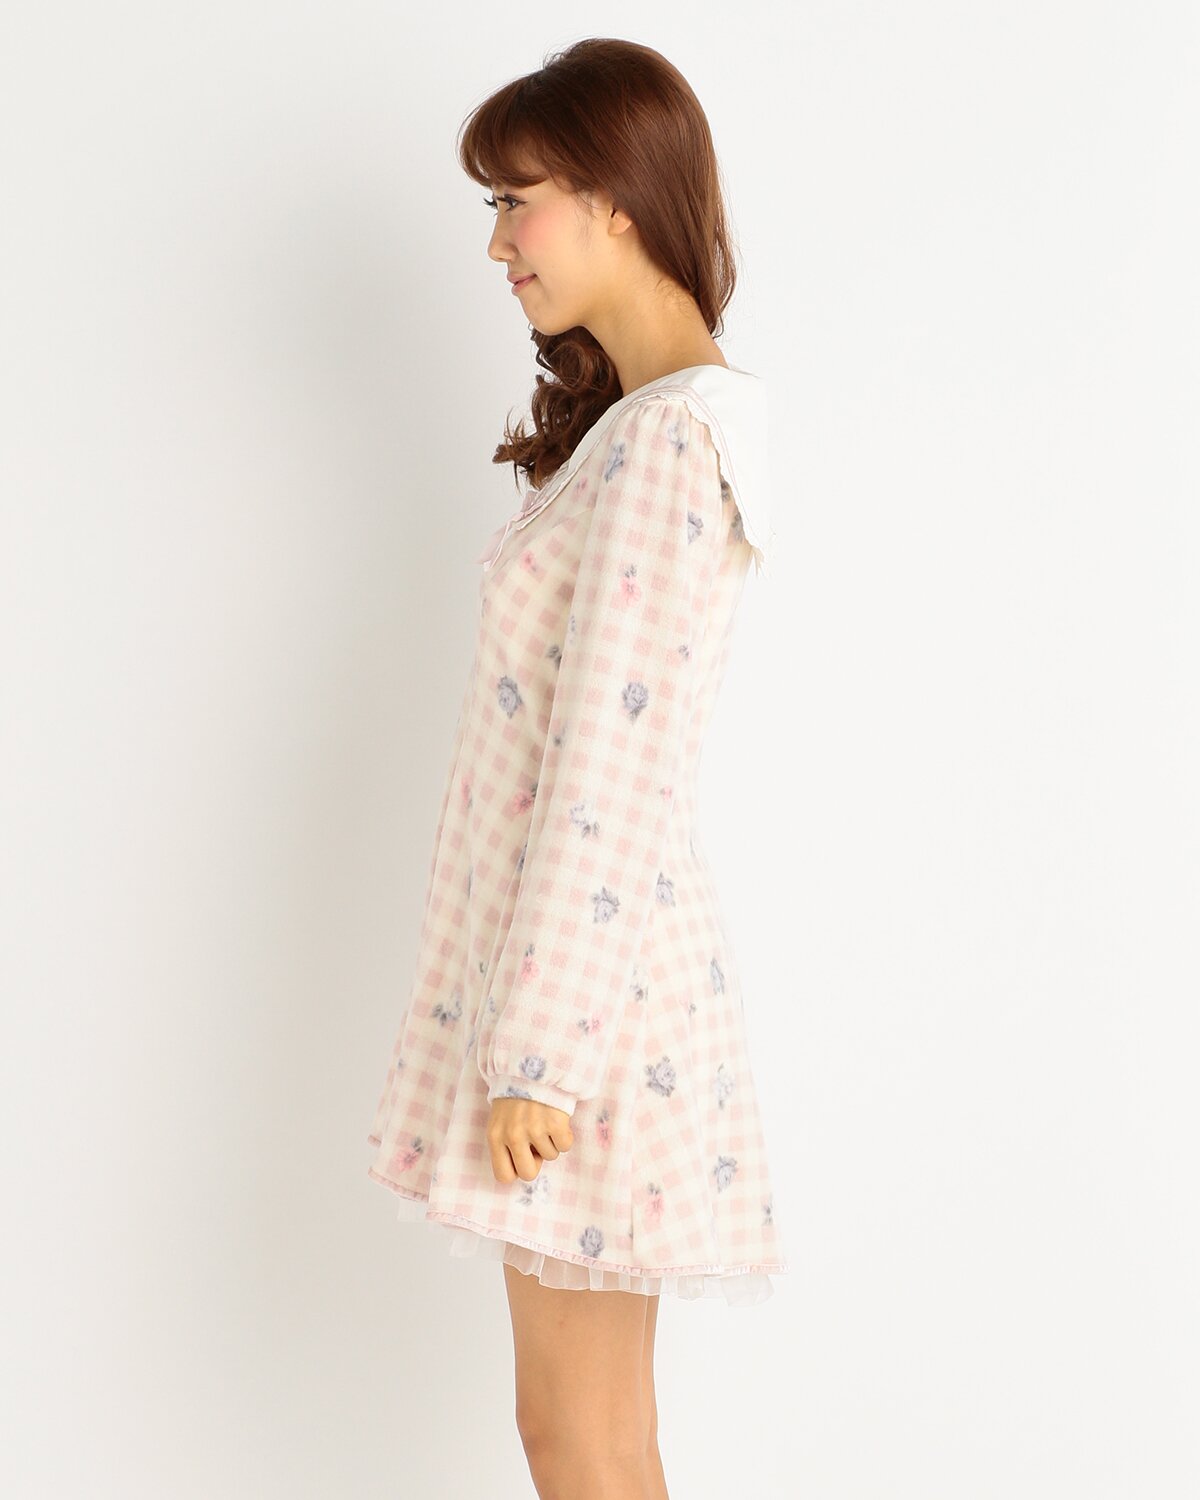 LIZ LISA Gingham Check & Tiny Flower Dress - Tokyo Otaku Mode (TOM)